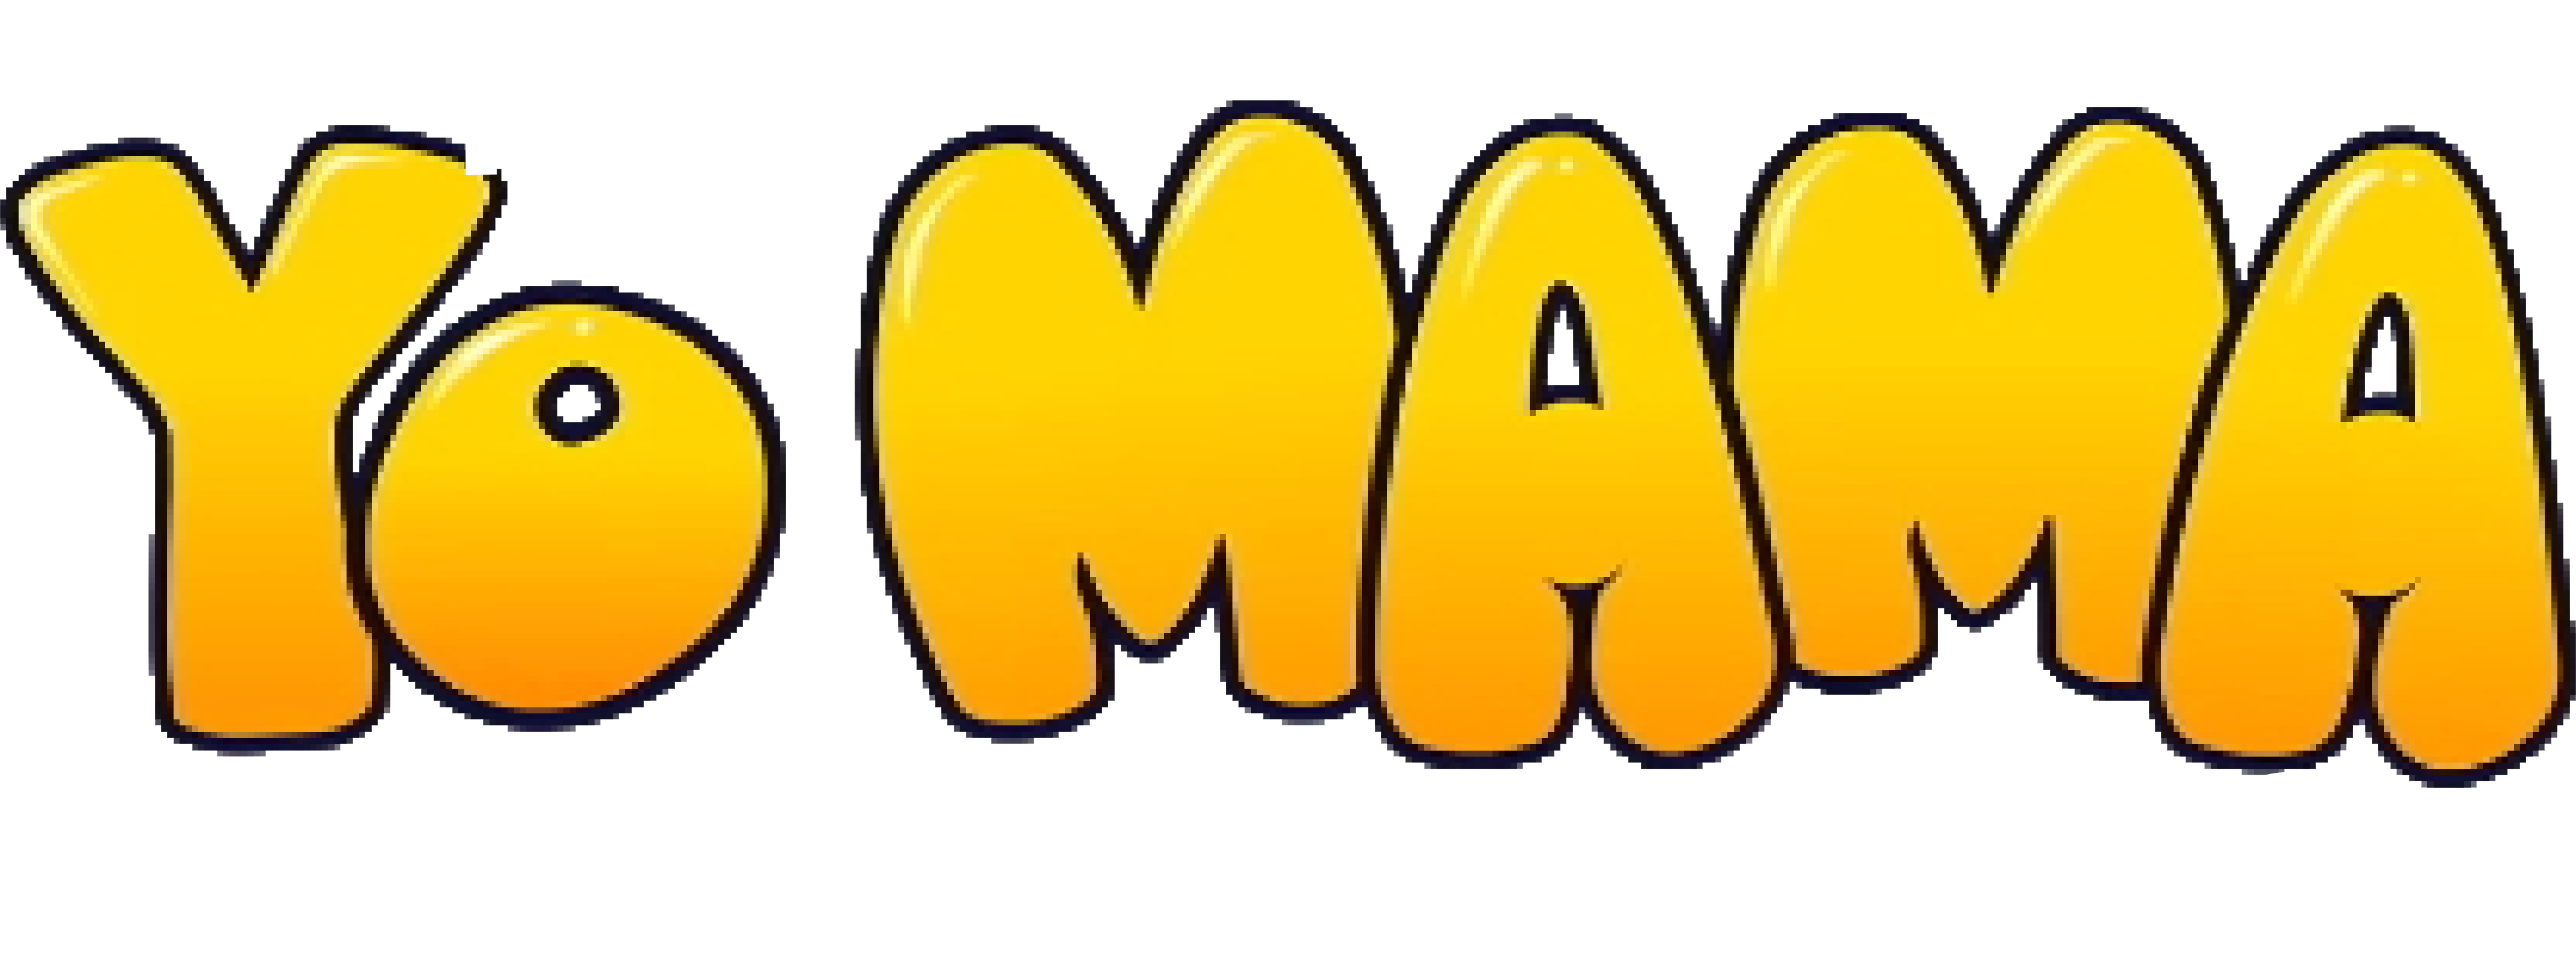 The Yo Mama Joke-O-Matic